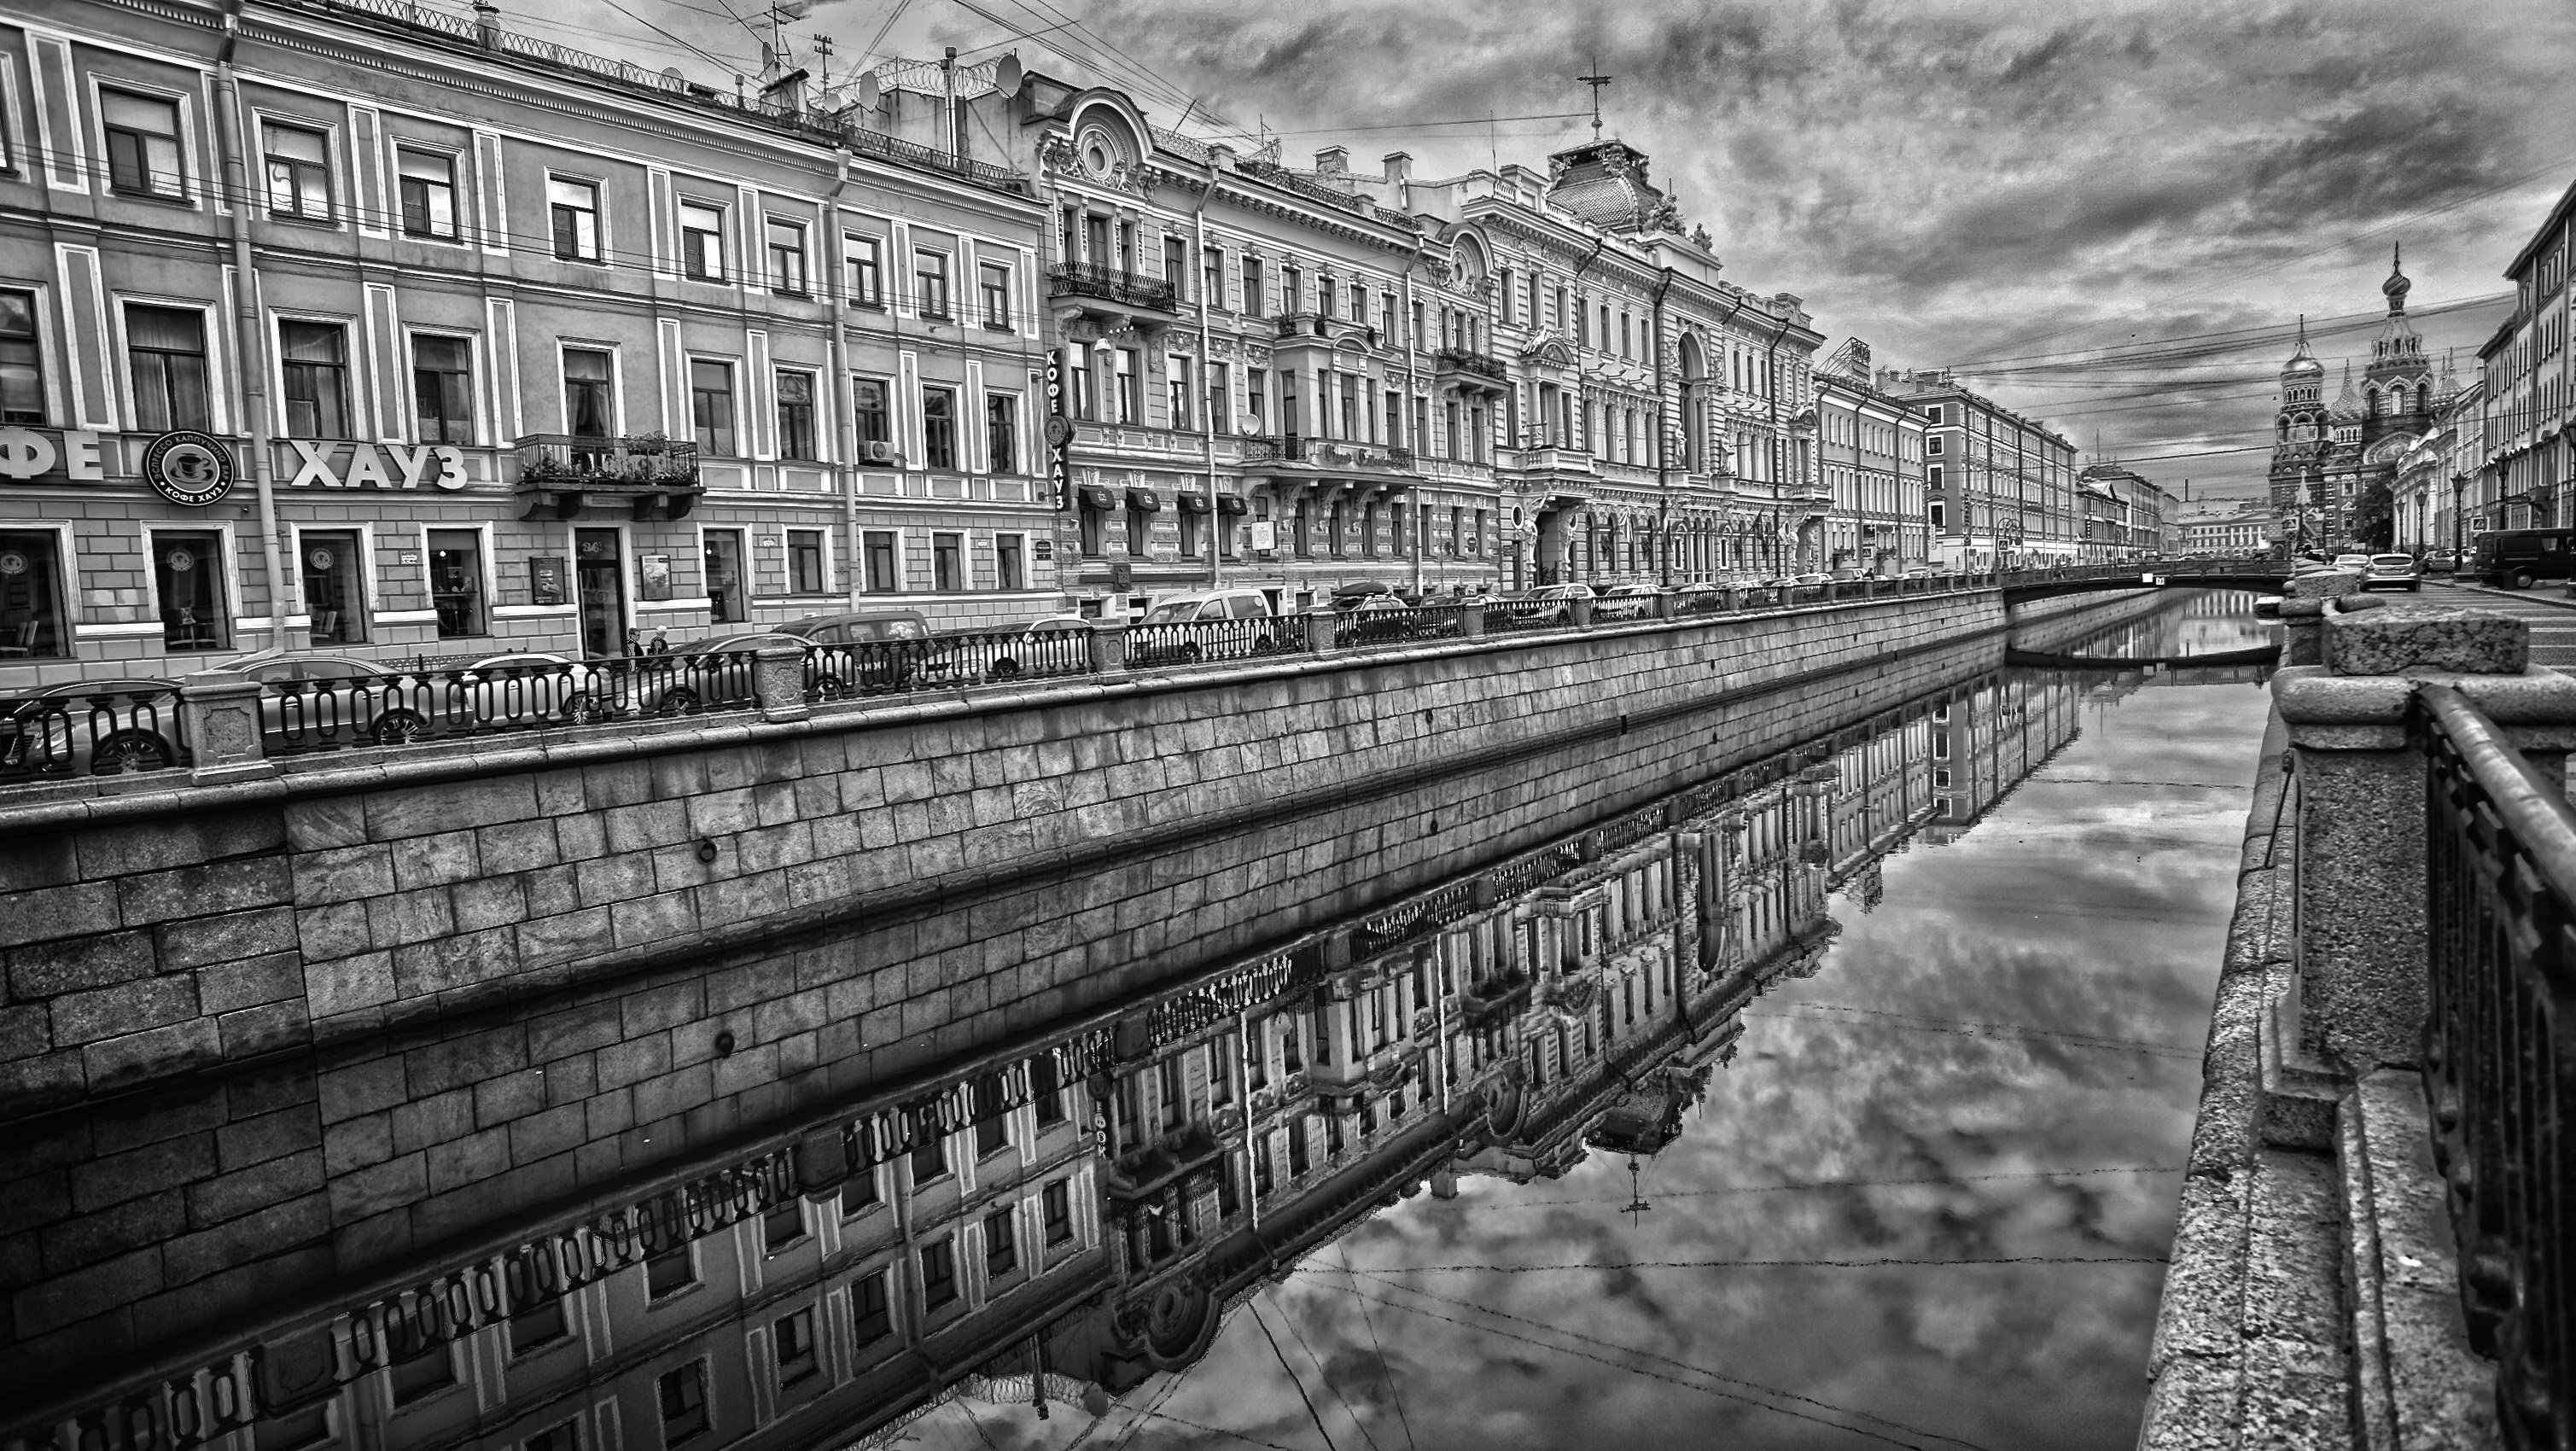 St Petersbourg, Russia.